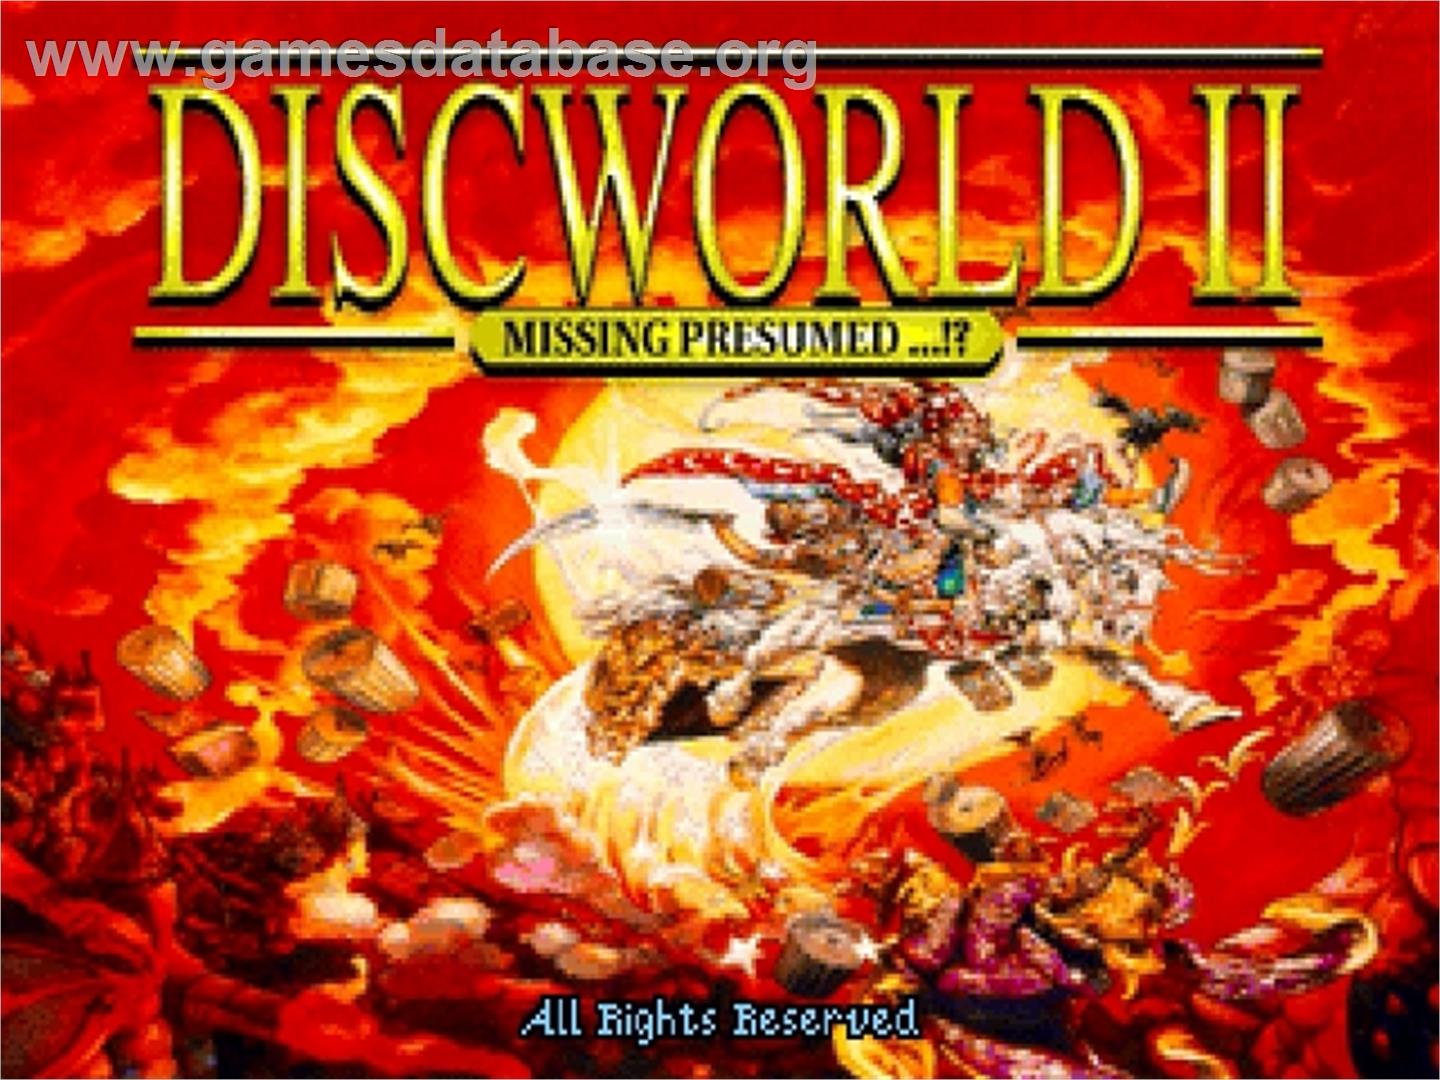 Discworld II: Missing, presumed... ! - Sega Saturn - Artwork - Title Screen